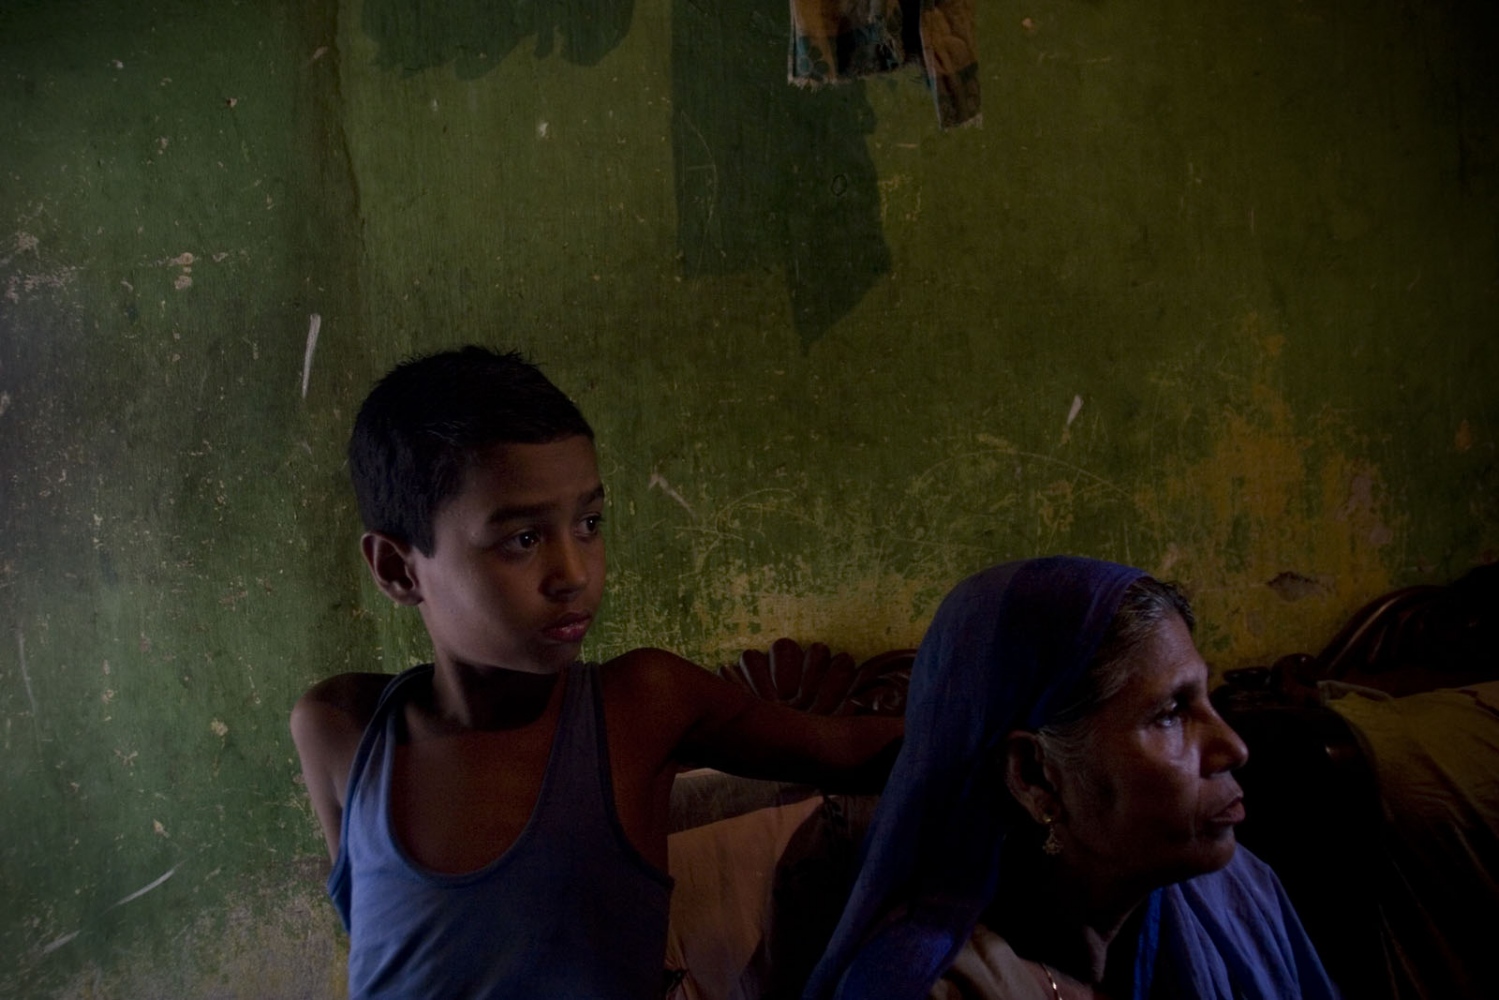 Jute Mill Workers; Bangladesh - 